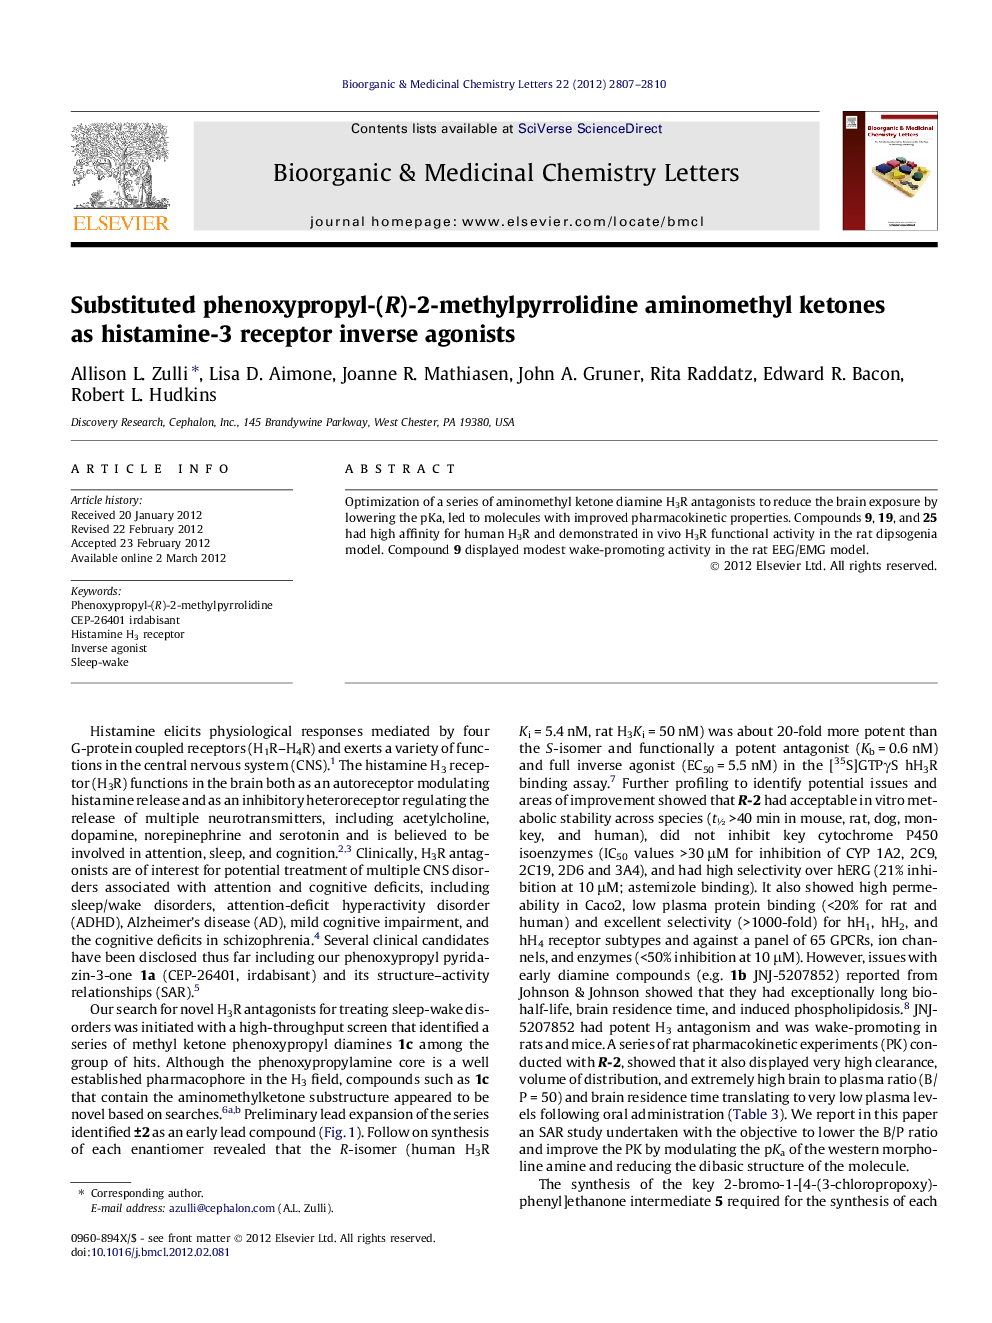 Substituted phenoxypropyl-(R)-2-methylpyrrolidine aminomethyl ketones as histamine-3 receptor inverse agonists